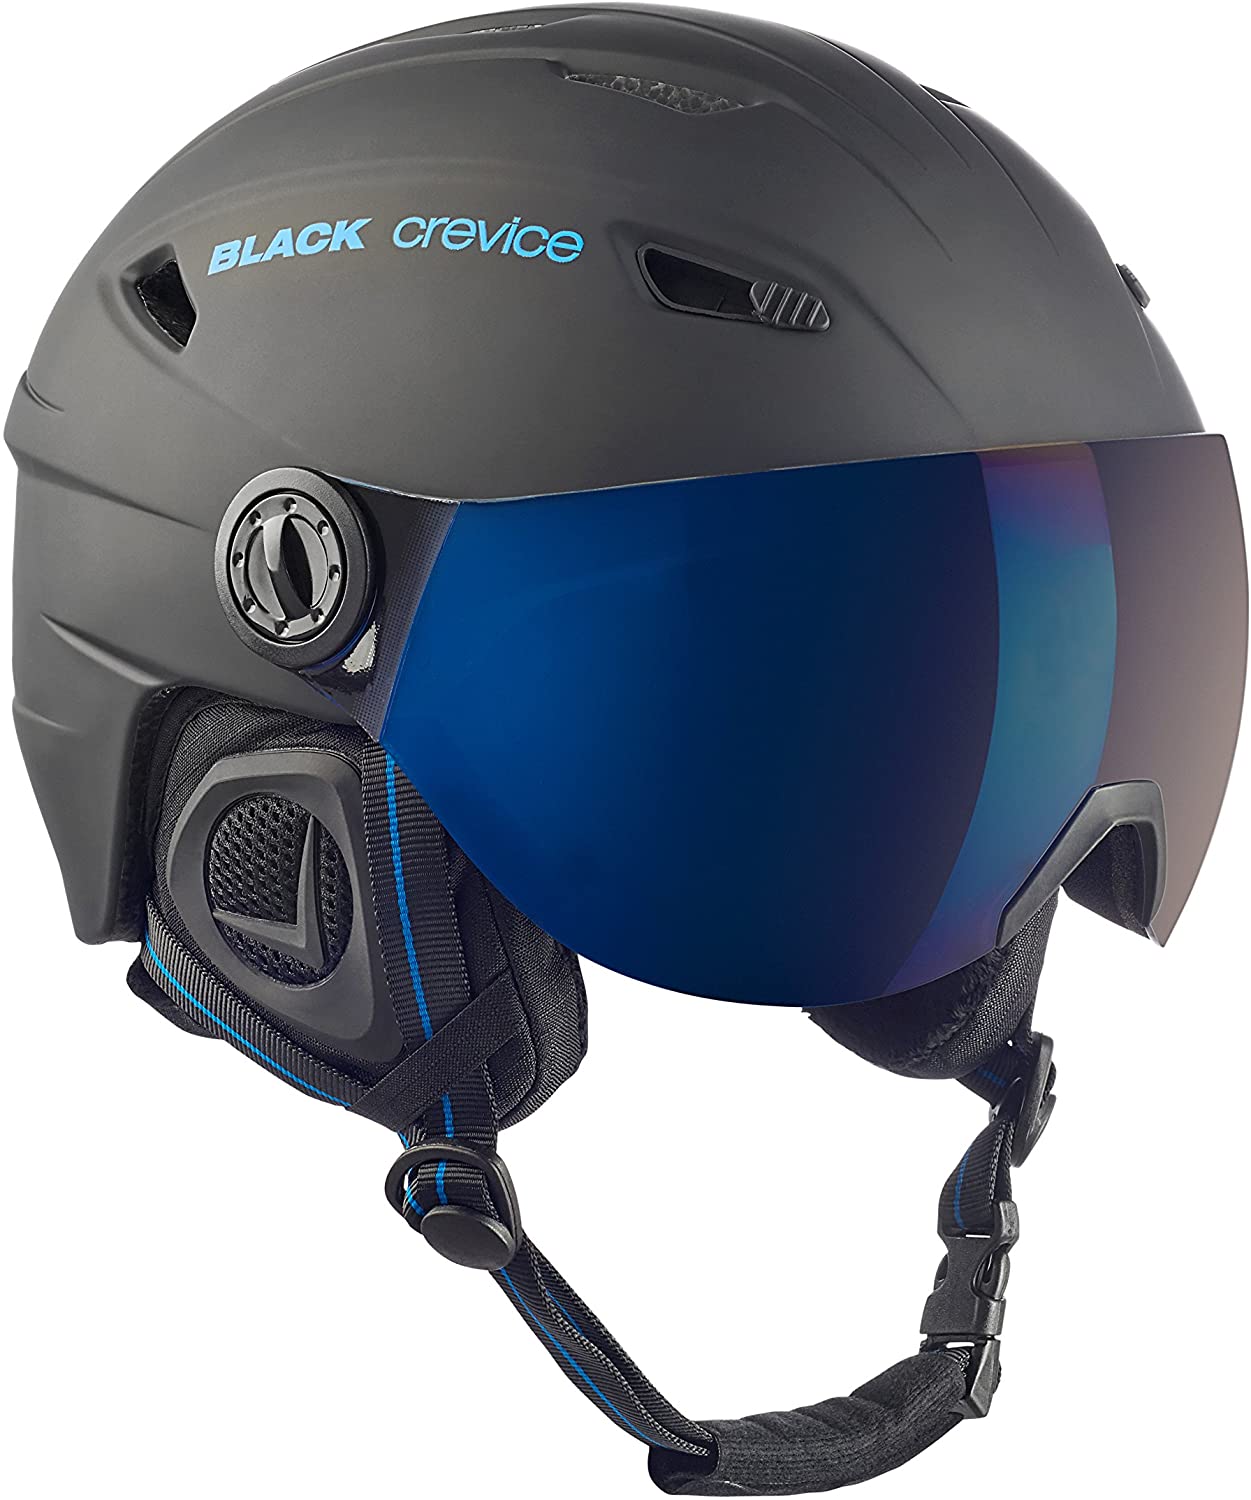 Black Crevice Adults Ski Helmet with Visor